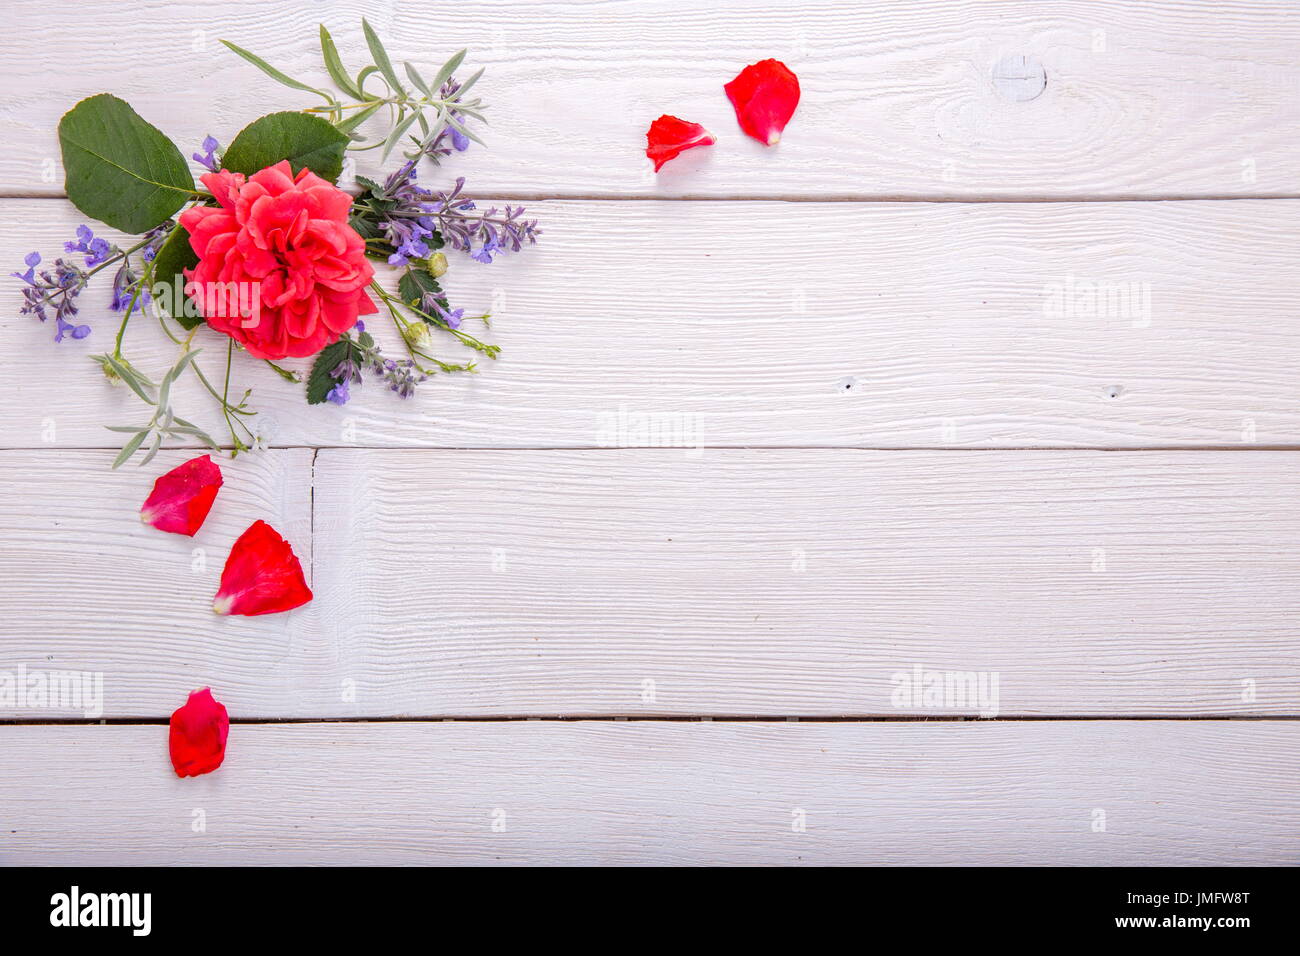 Red rose on white wooden background. David Austin Rose Golden Celebration Stock Photo